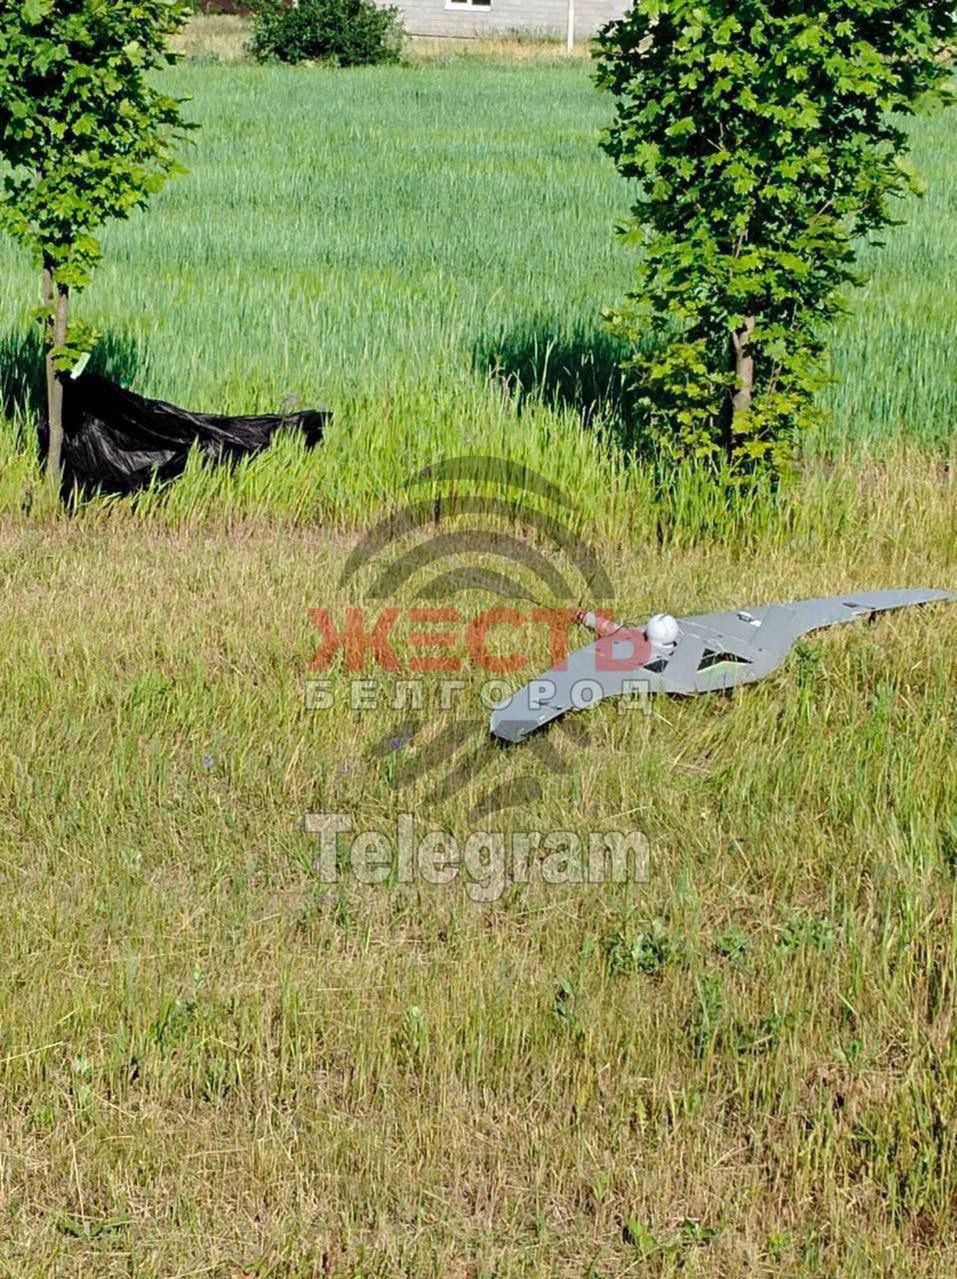 Russian forces shoot down own Supercam drone near Ukraine border